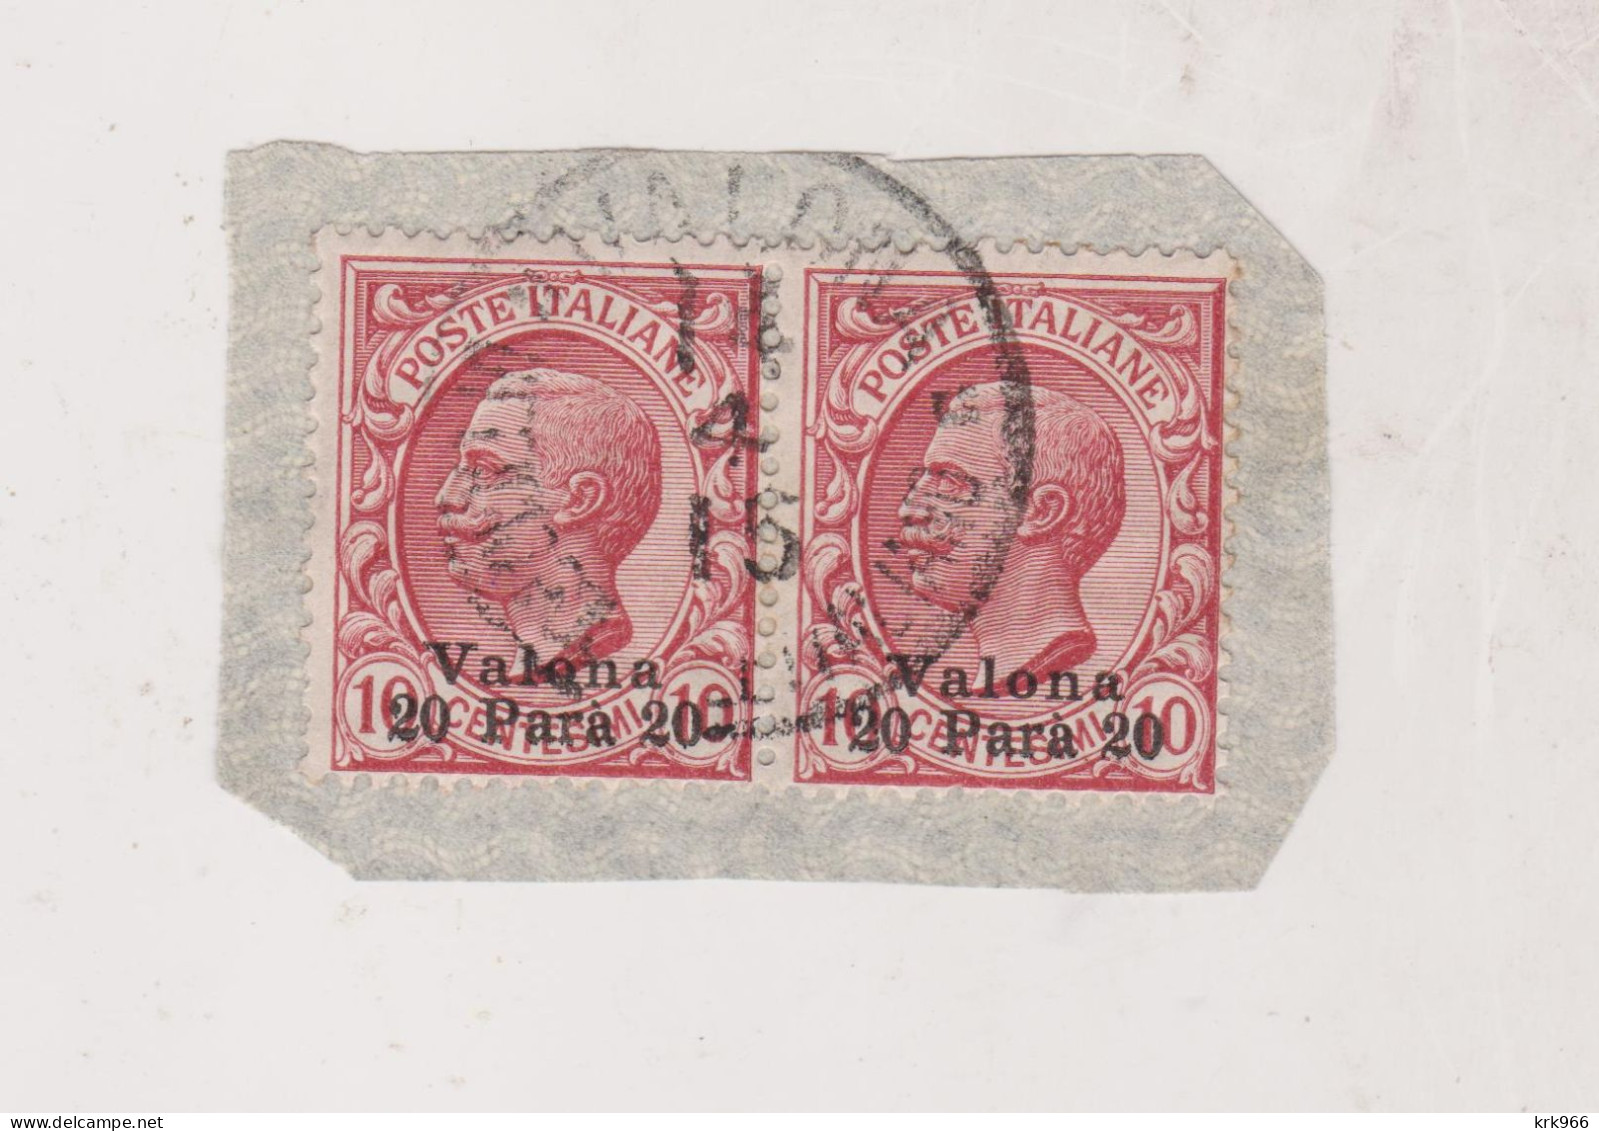 ITALY  ALBANIA VALONA Nice Stamps Used On Piece - Albanie